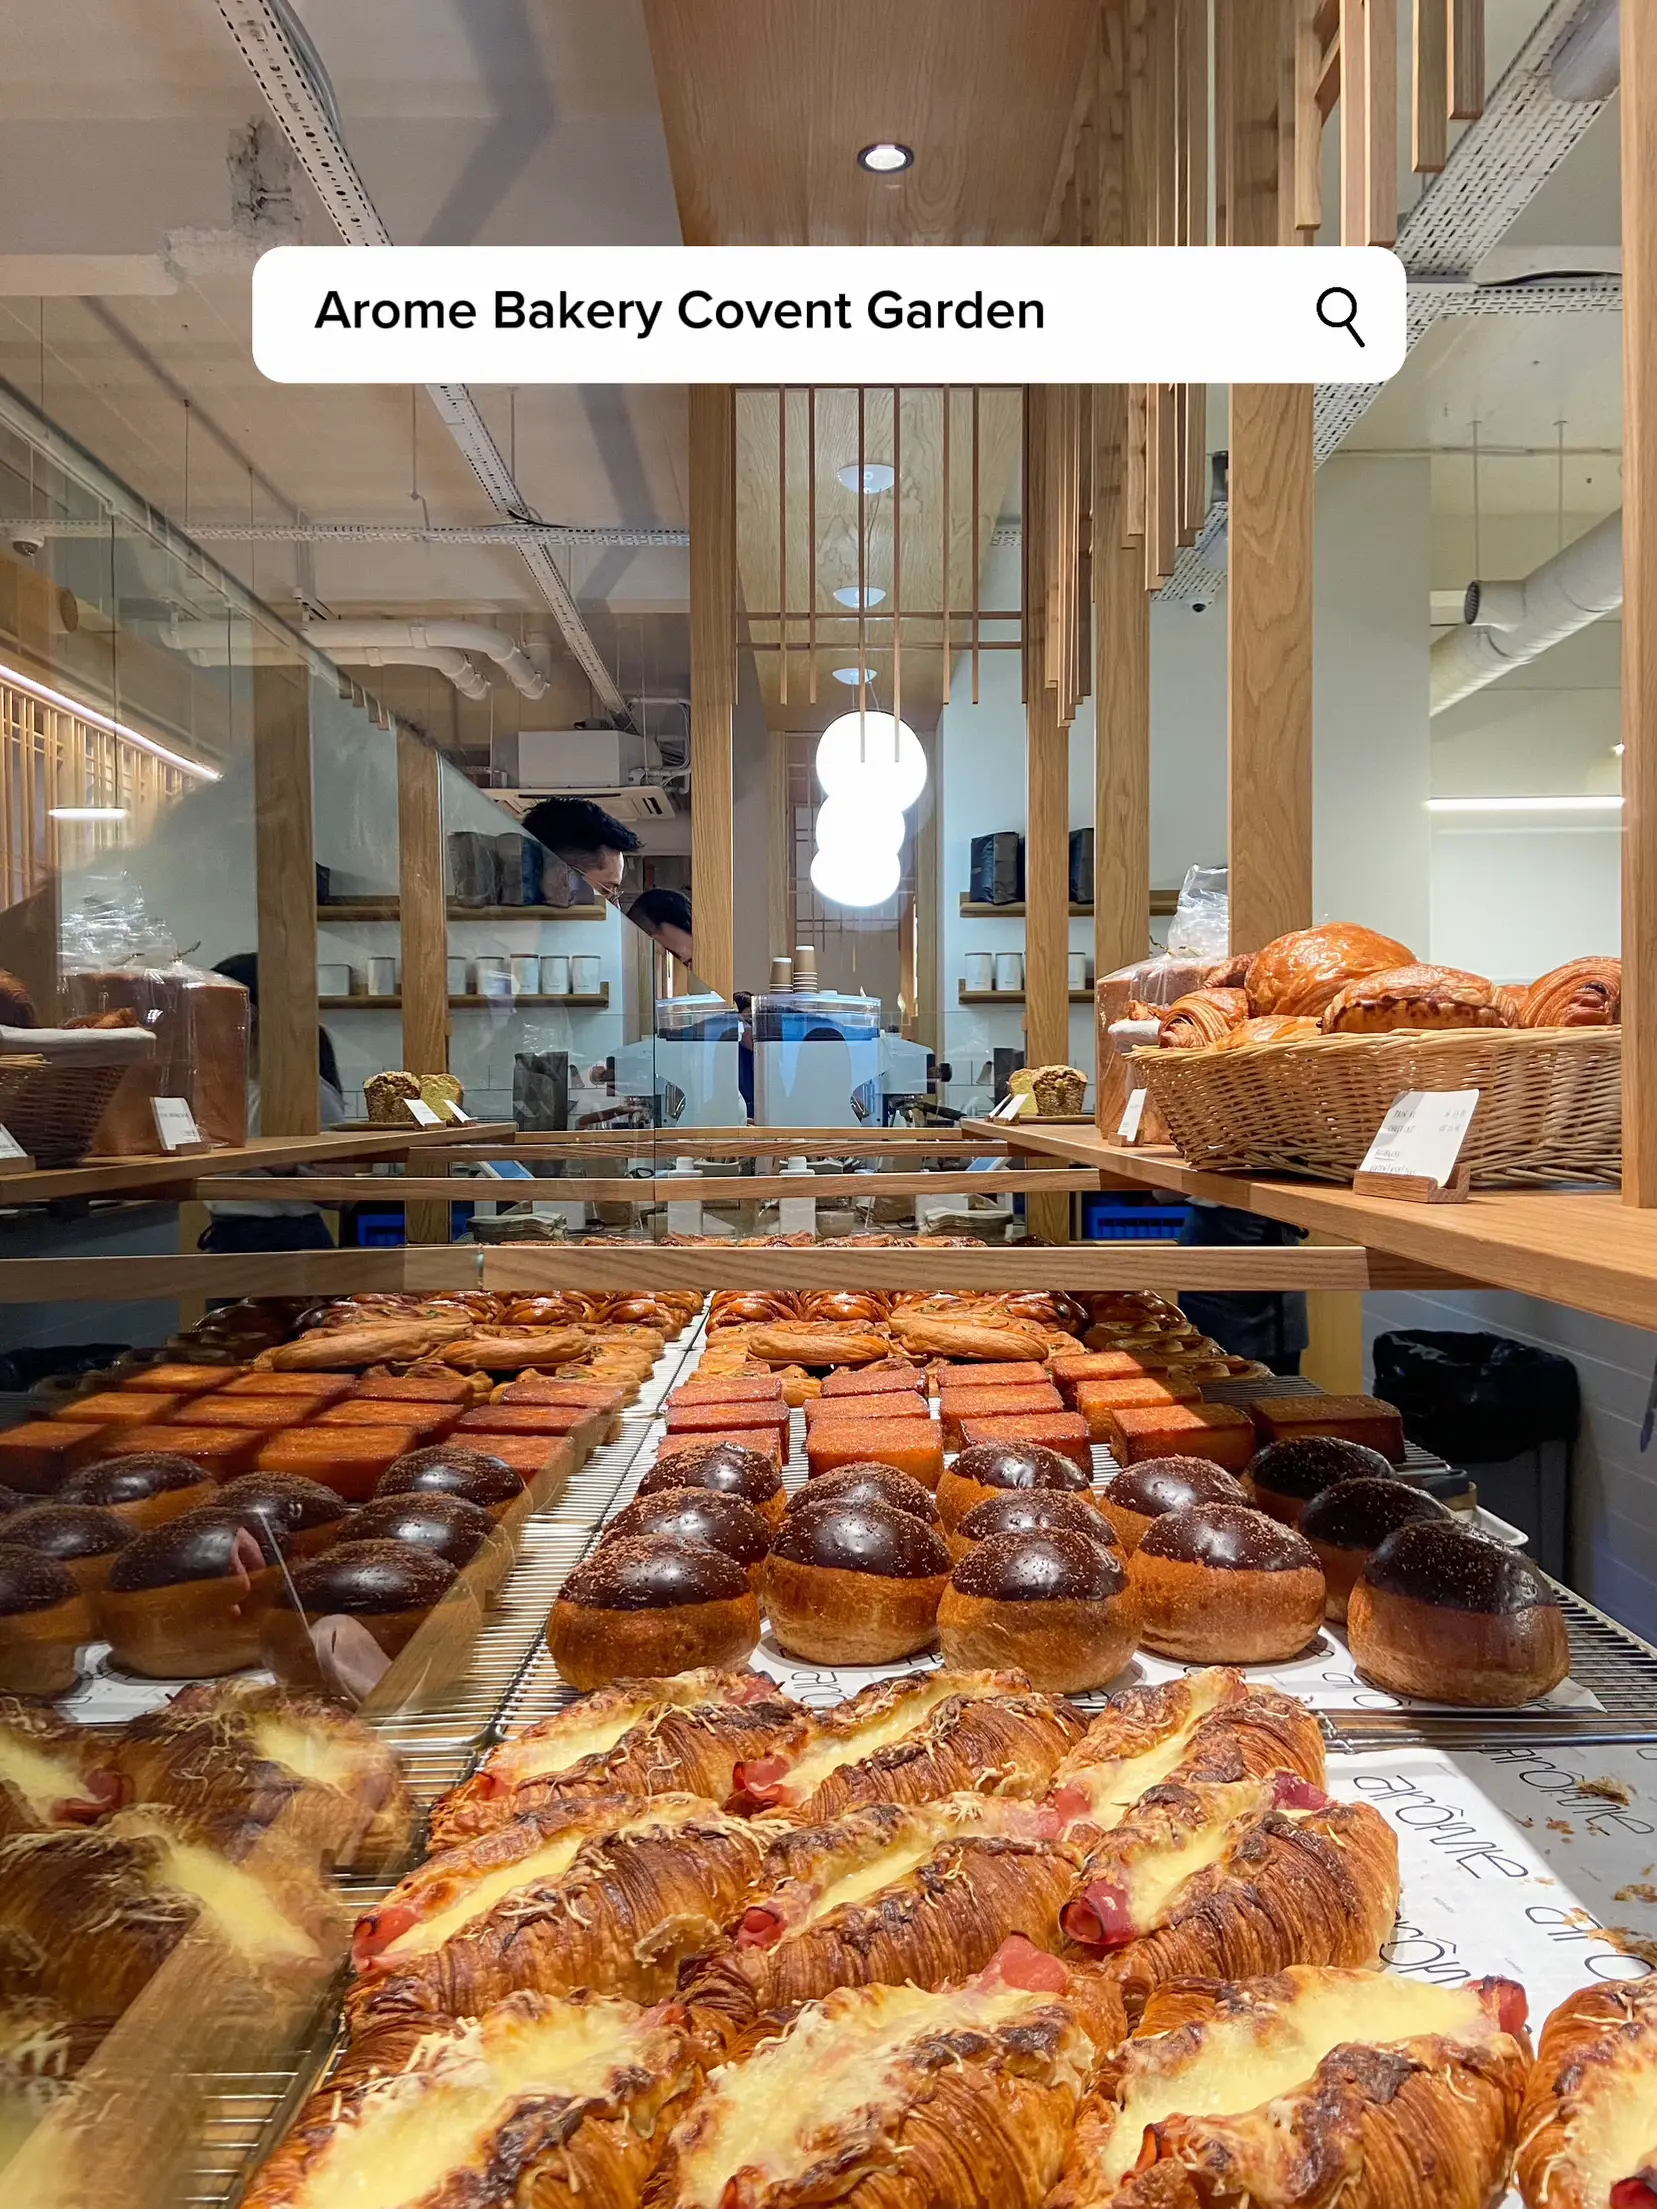 Arome Bakery - Wikipedia